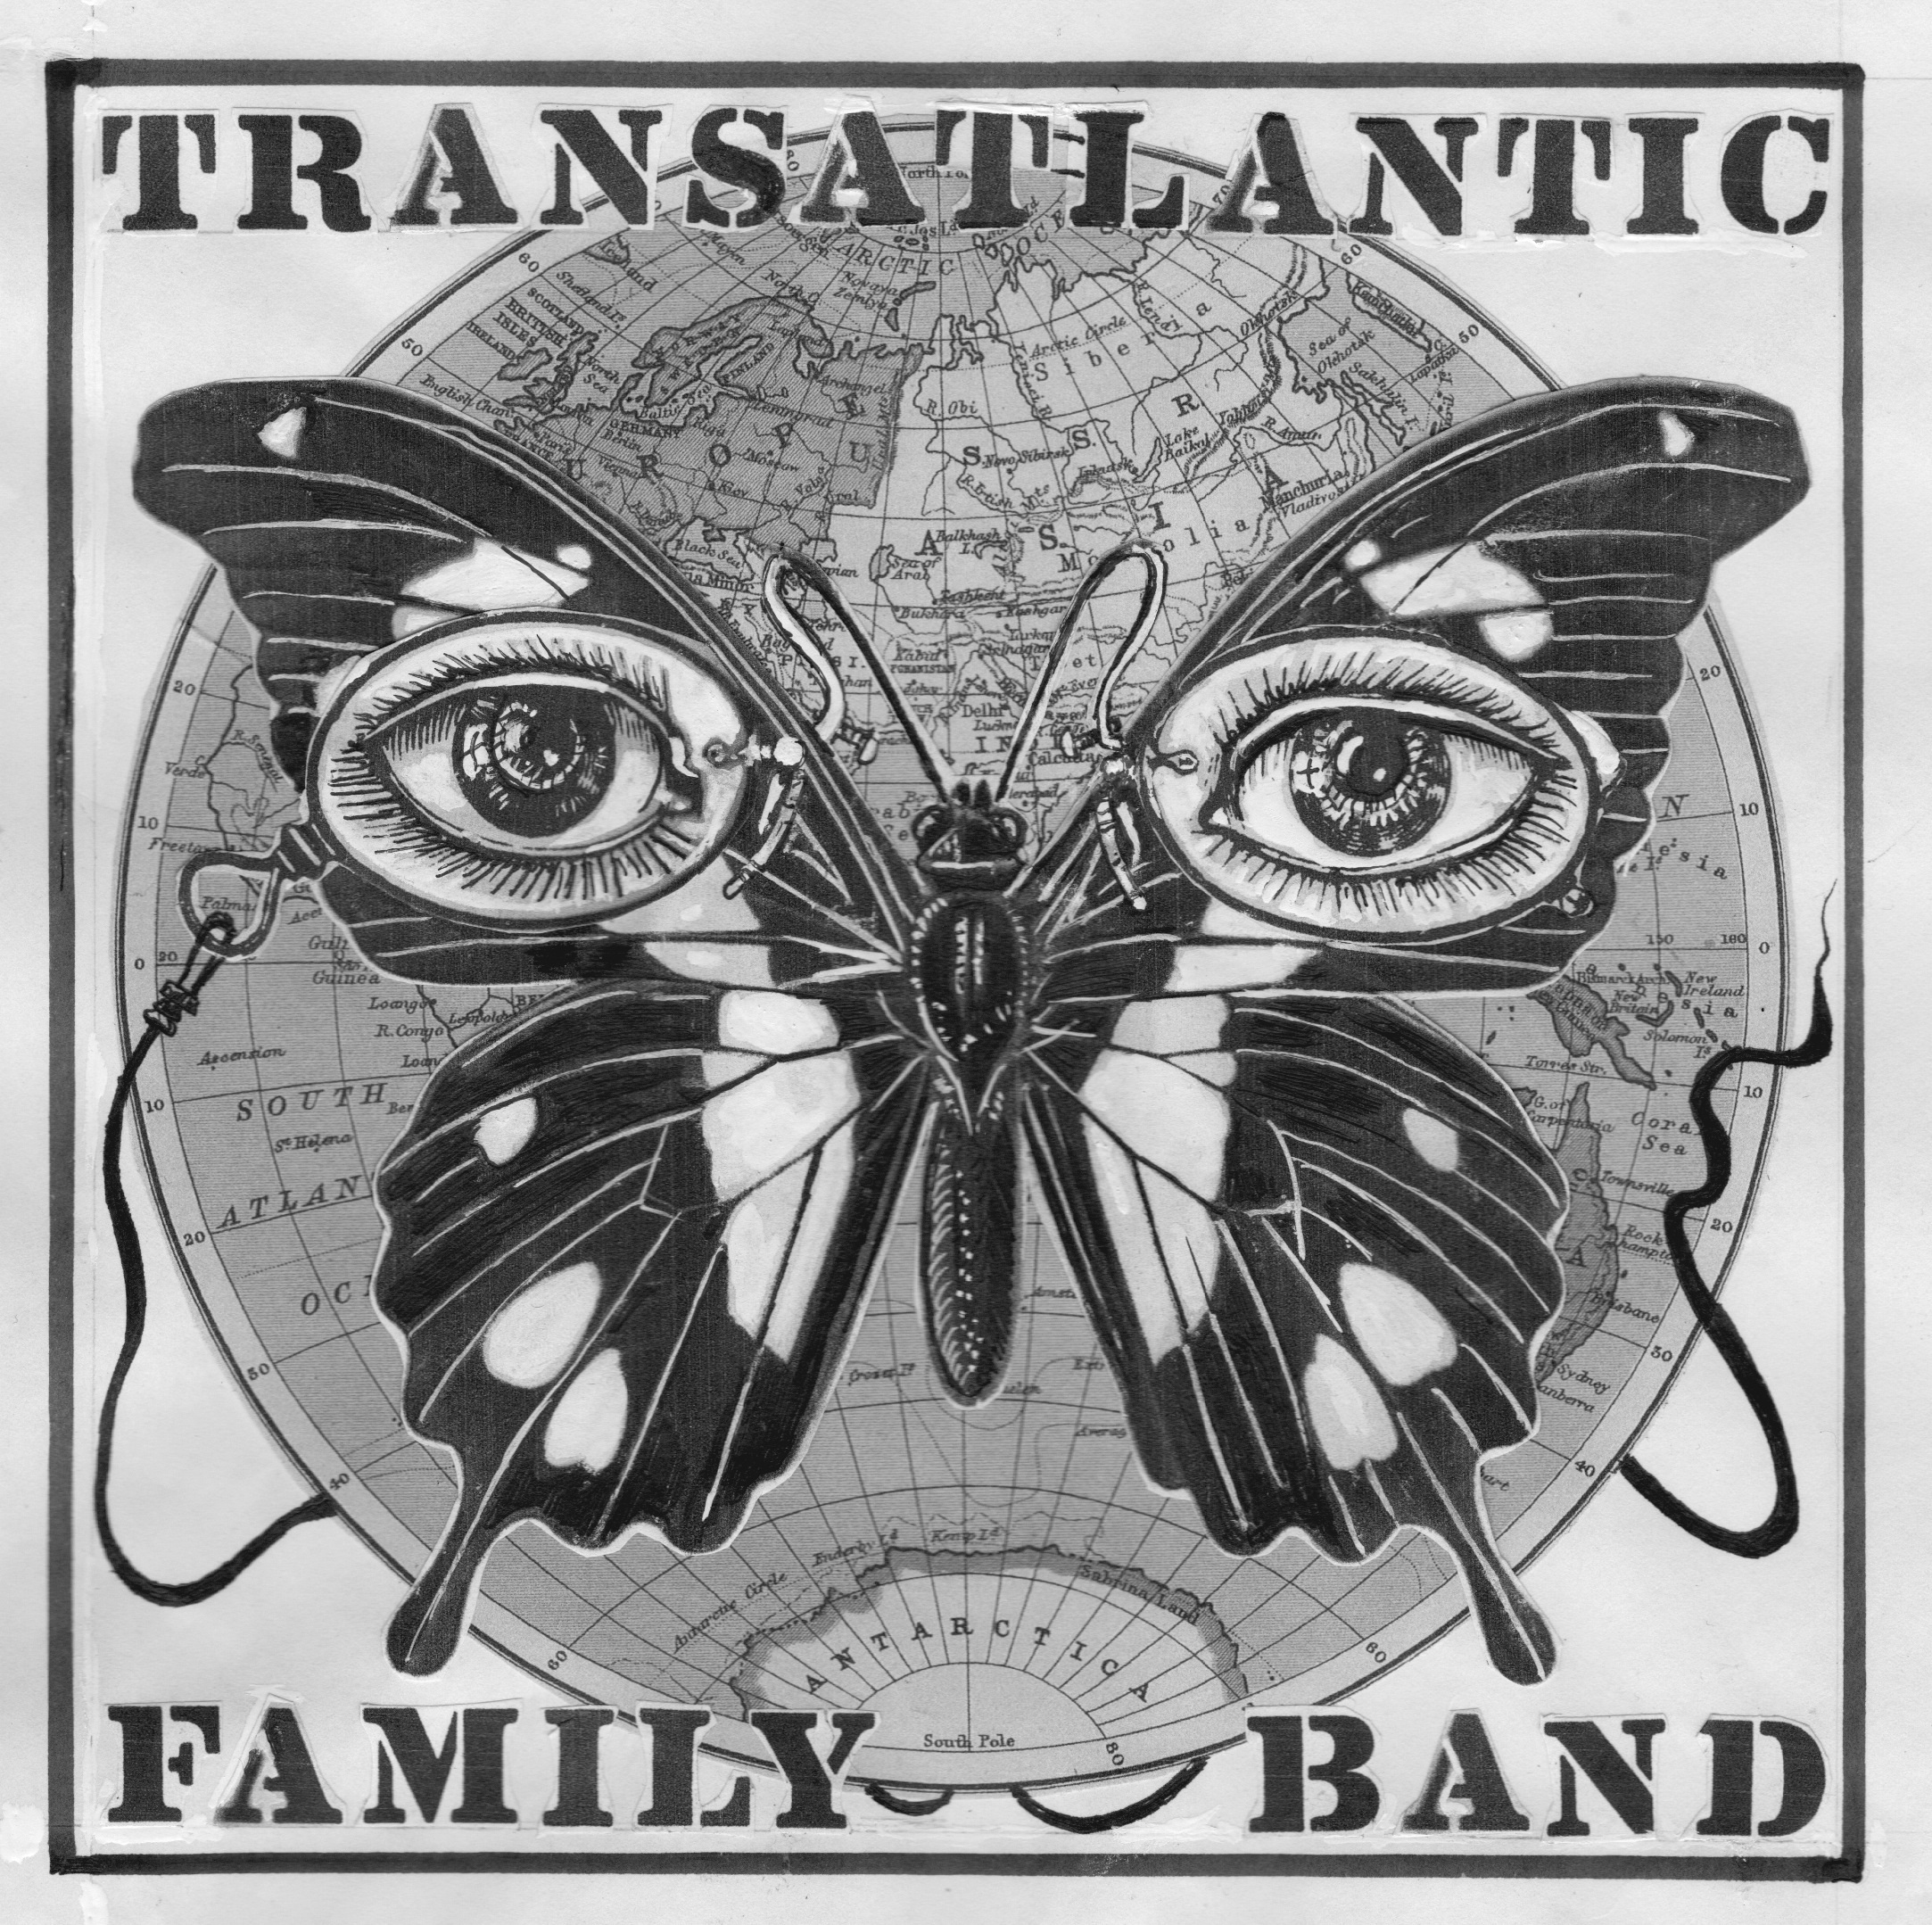 Transatlantic Family Band